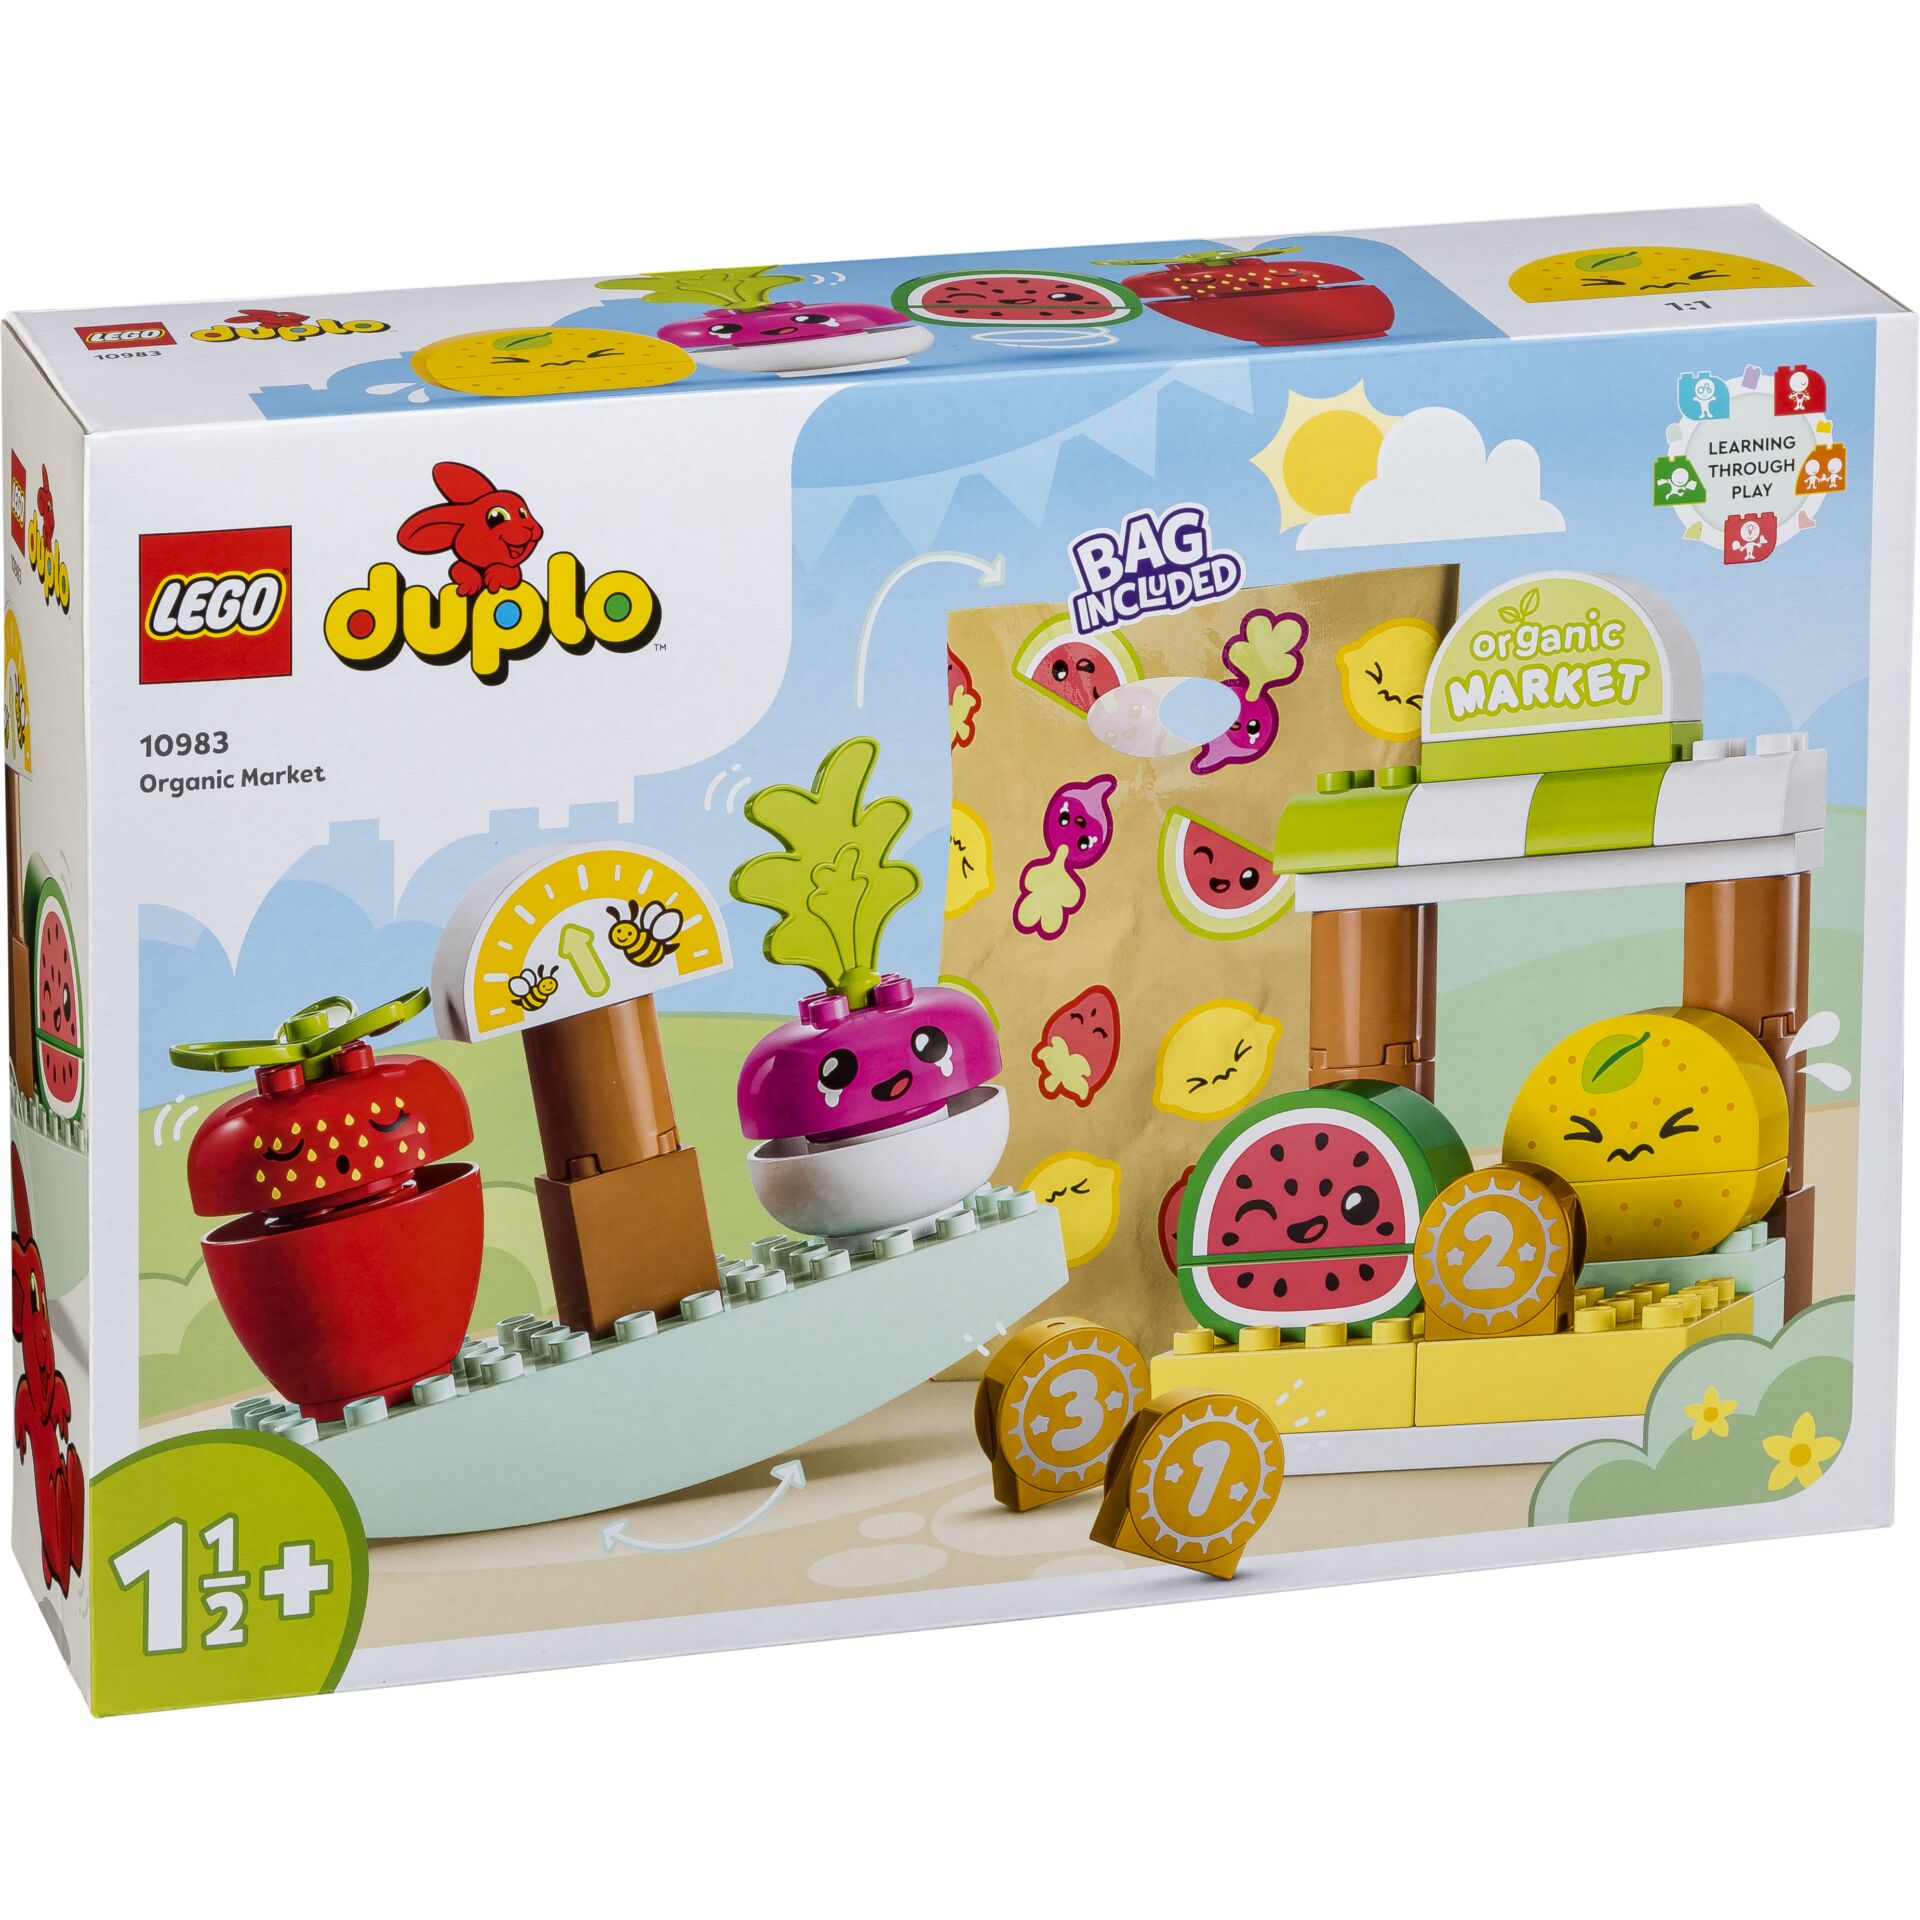 Lego -Konstruktionsspielzeug 10983 -Lego Toys/Spielzeug Biomarkt DUPLO